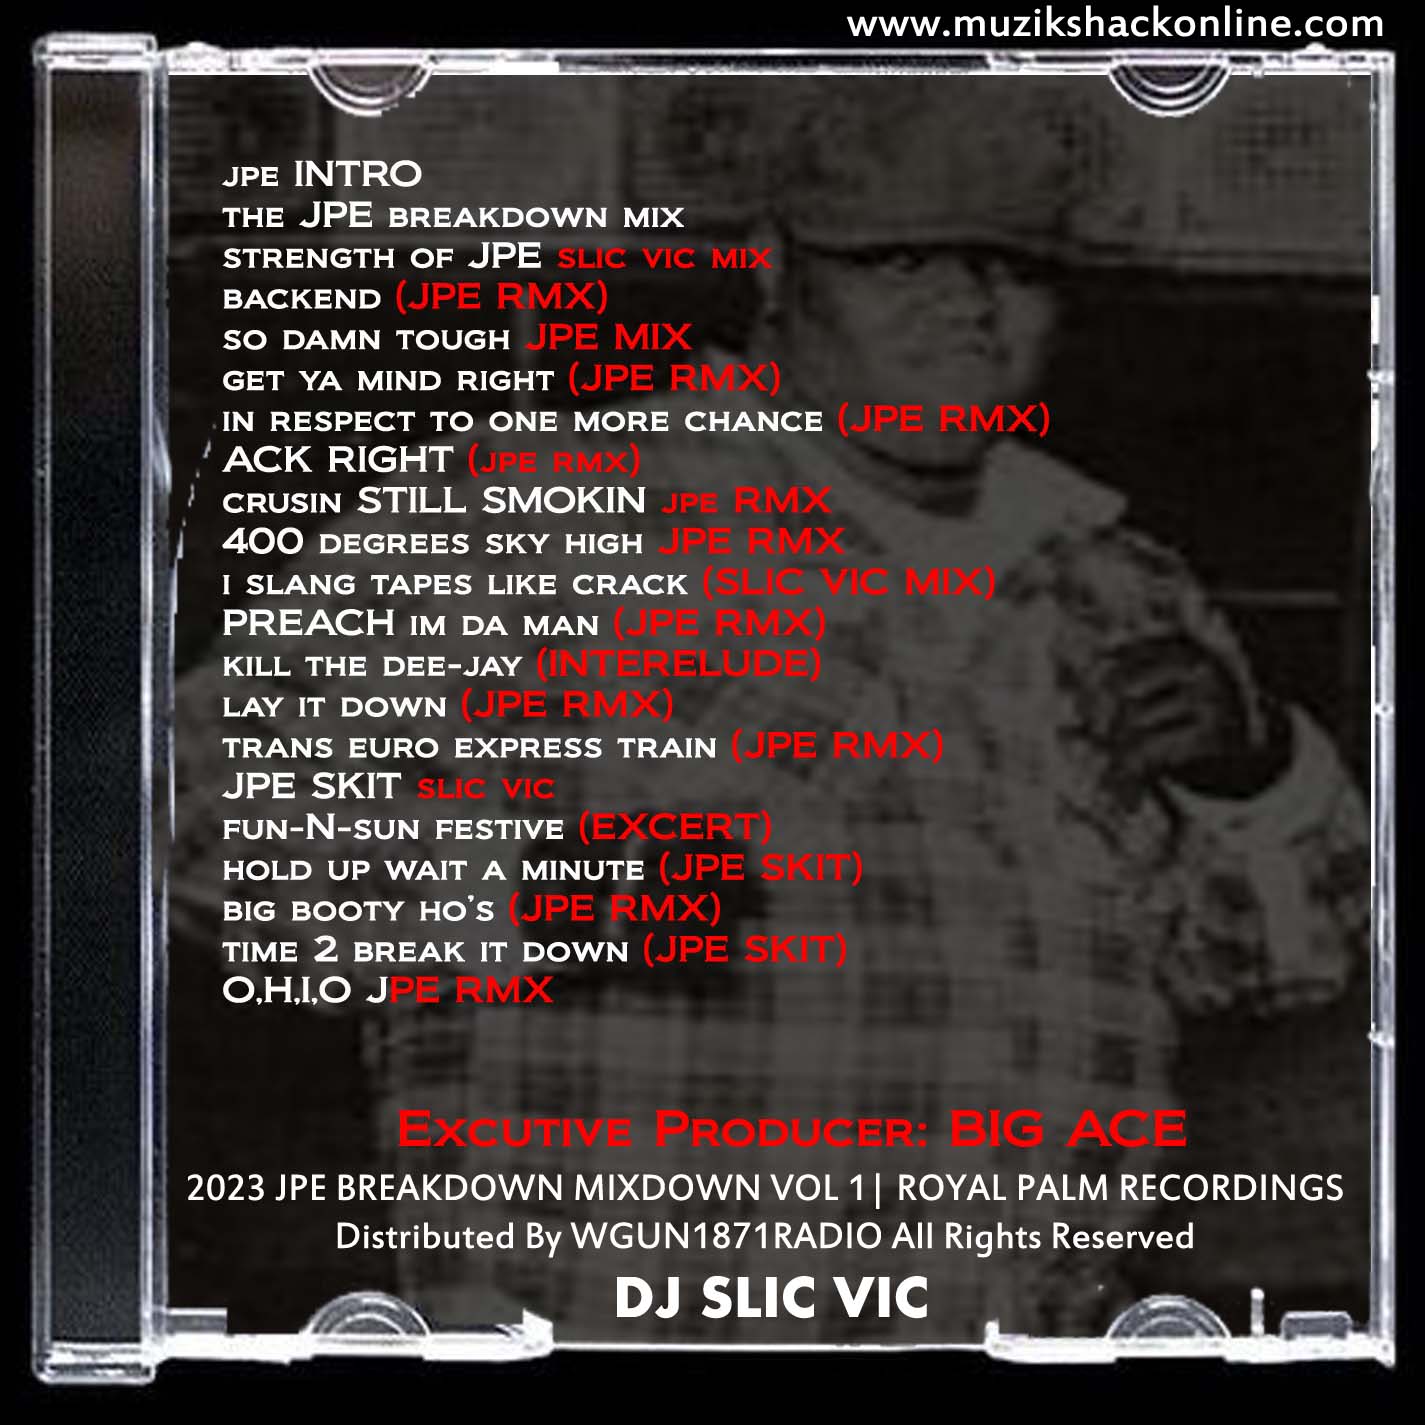 SLIC VIC - THE MIXDOWN VOL 1 (JPE BREAKDOWN) c2023